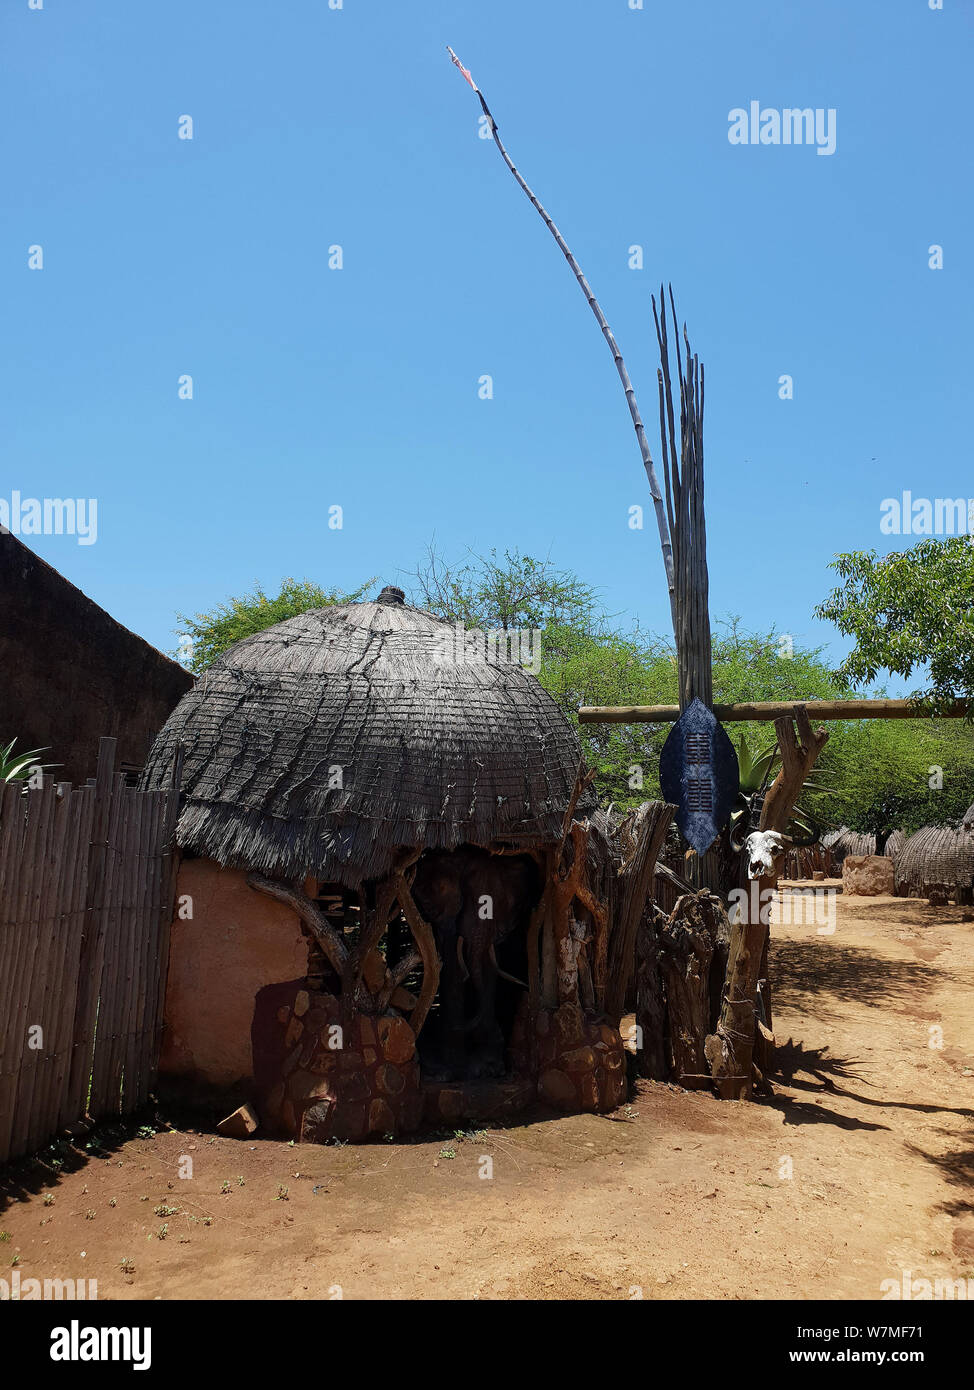 Entrance to the Zulu village at Shakaland Zulu Cultural Village, Eshowe, Kwazulu Natal, South Africa Stock Photo